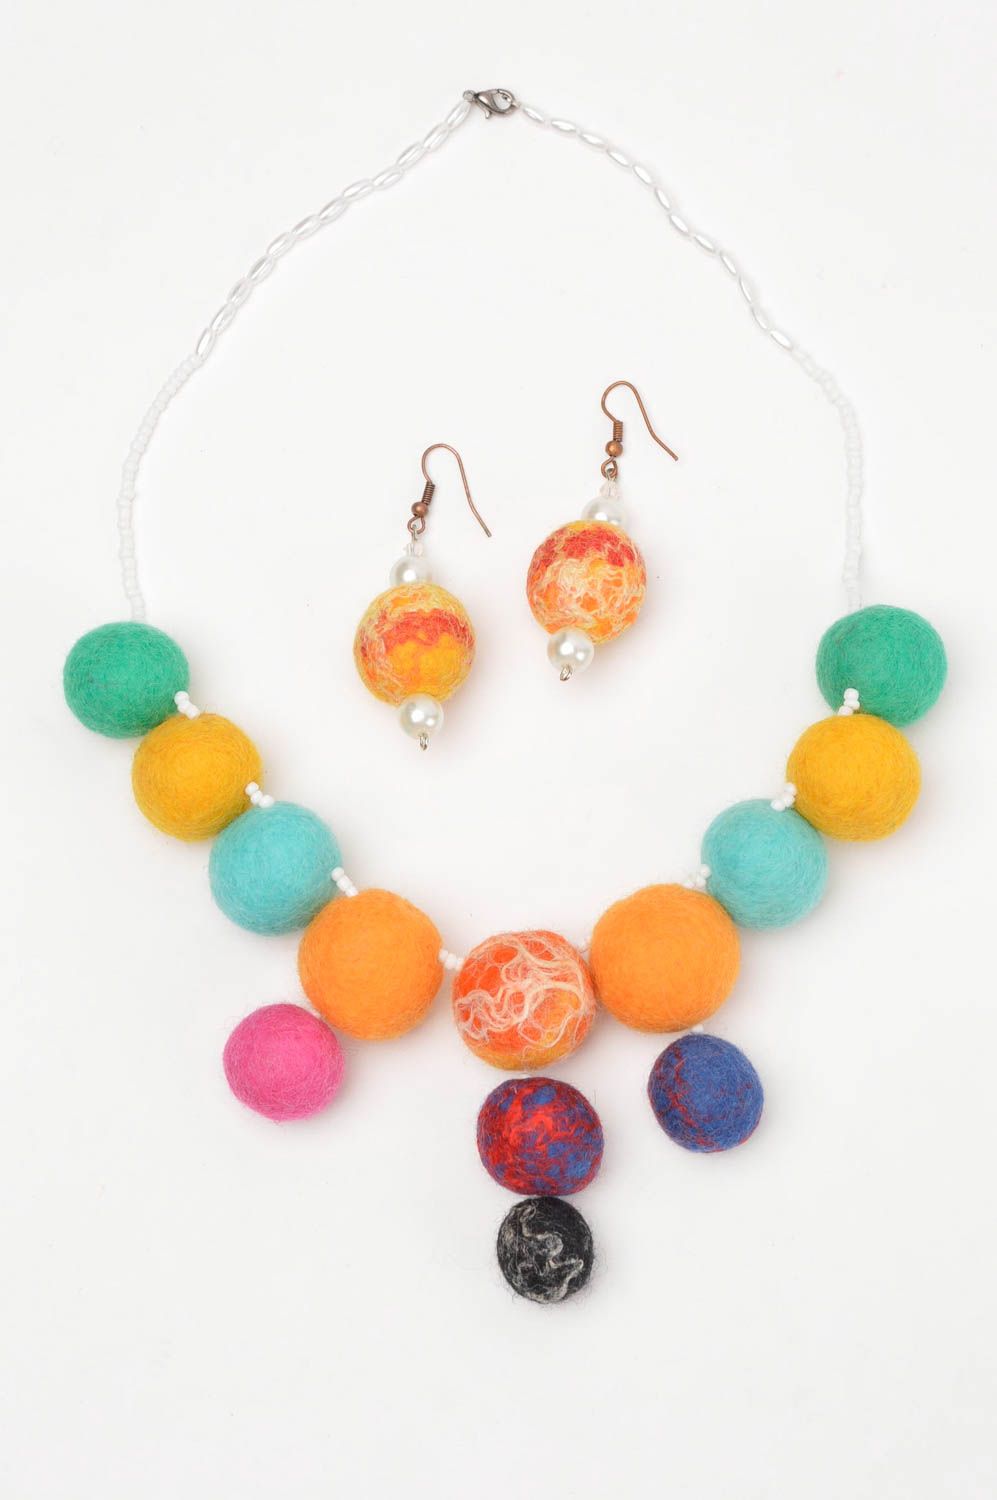 Handmade jewelry designer accessory wool necklace wool earrings gift ideas photo 1